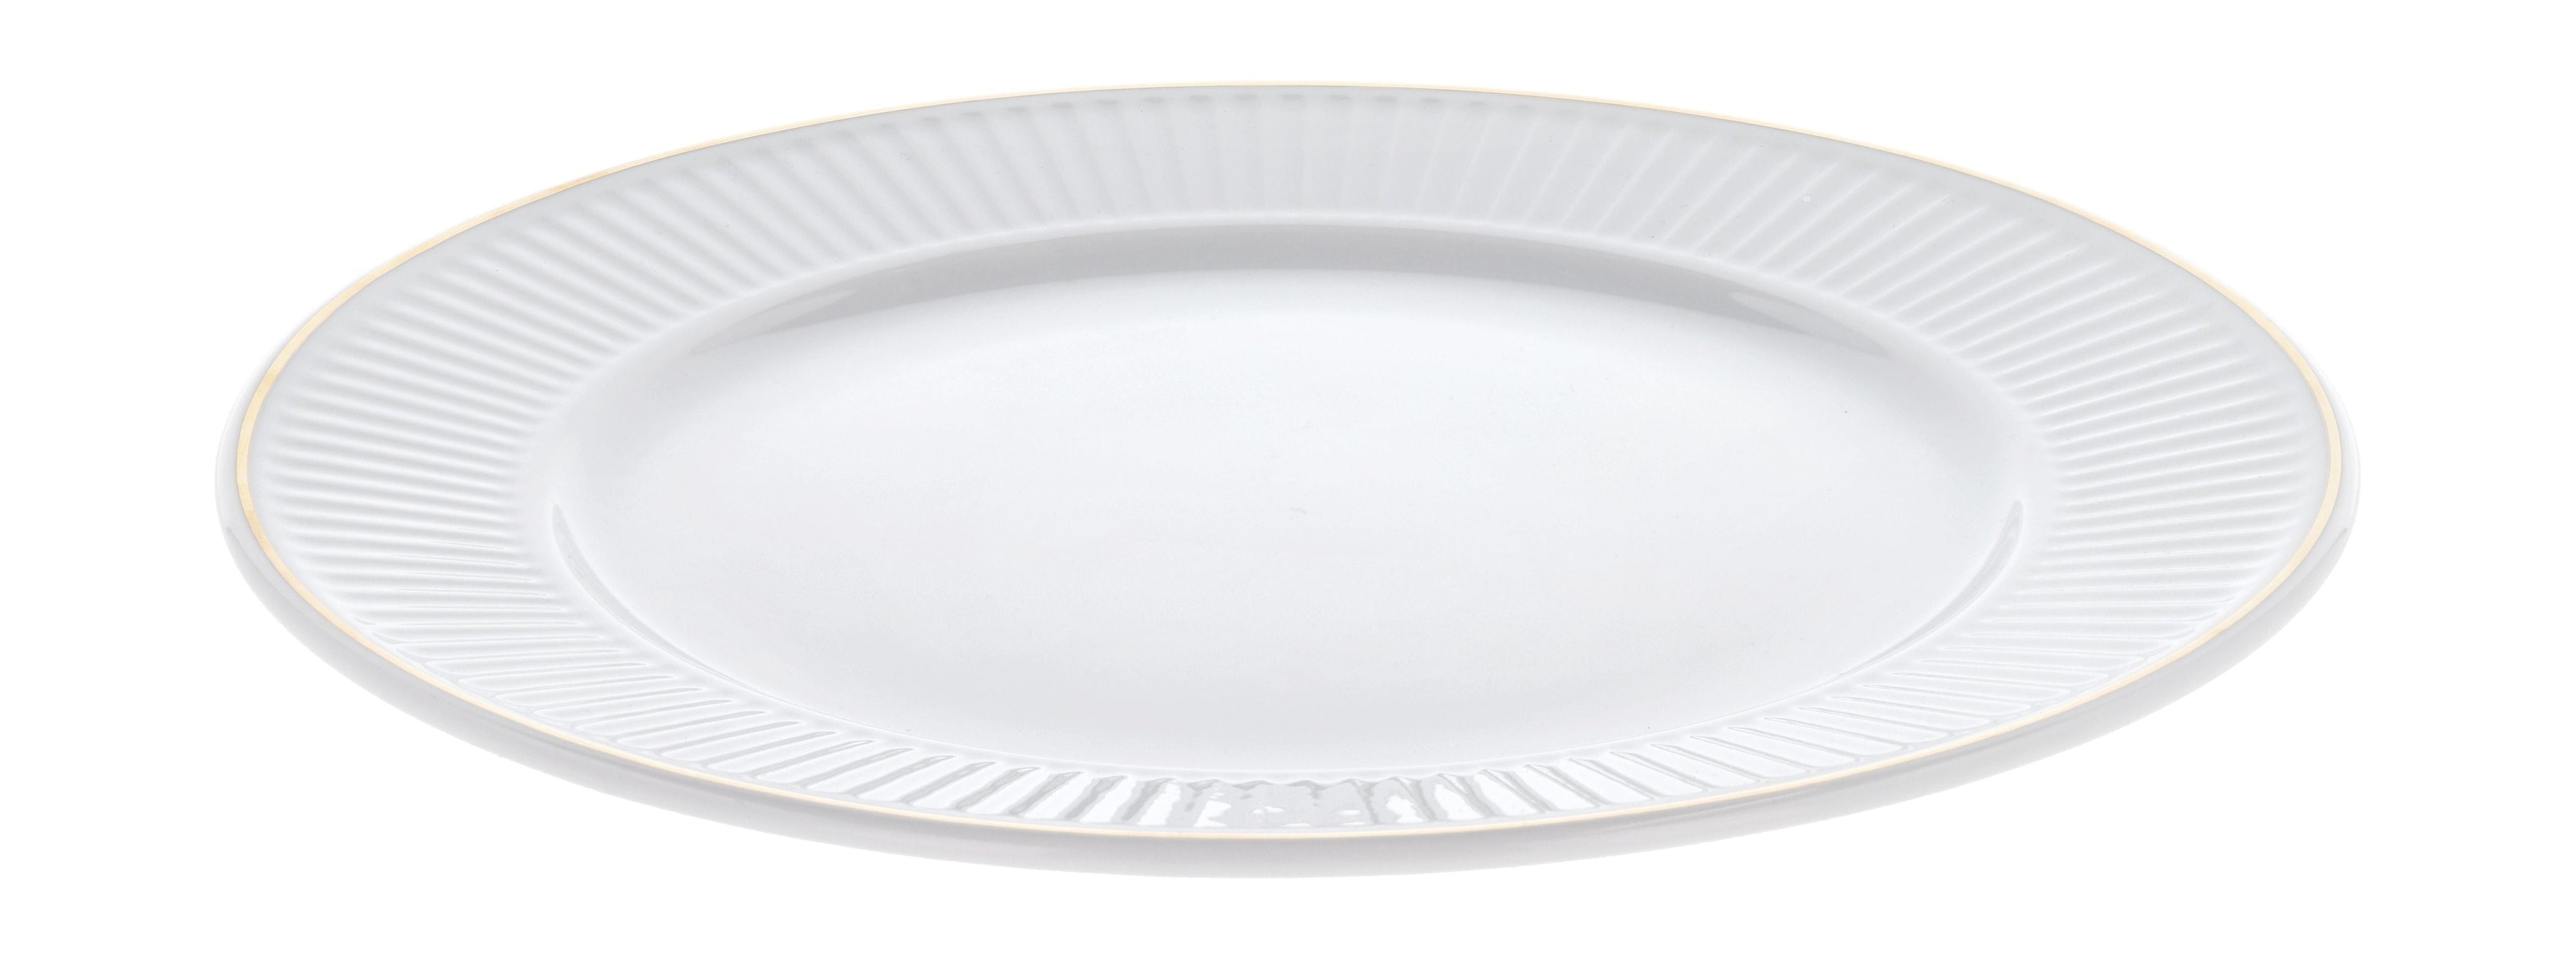 Piatto di pillovuyt Plate White/Matt Gold, Ø28 cm